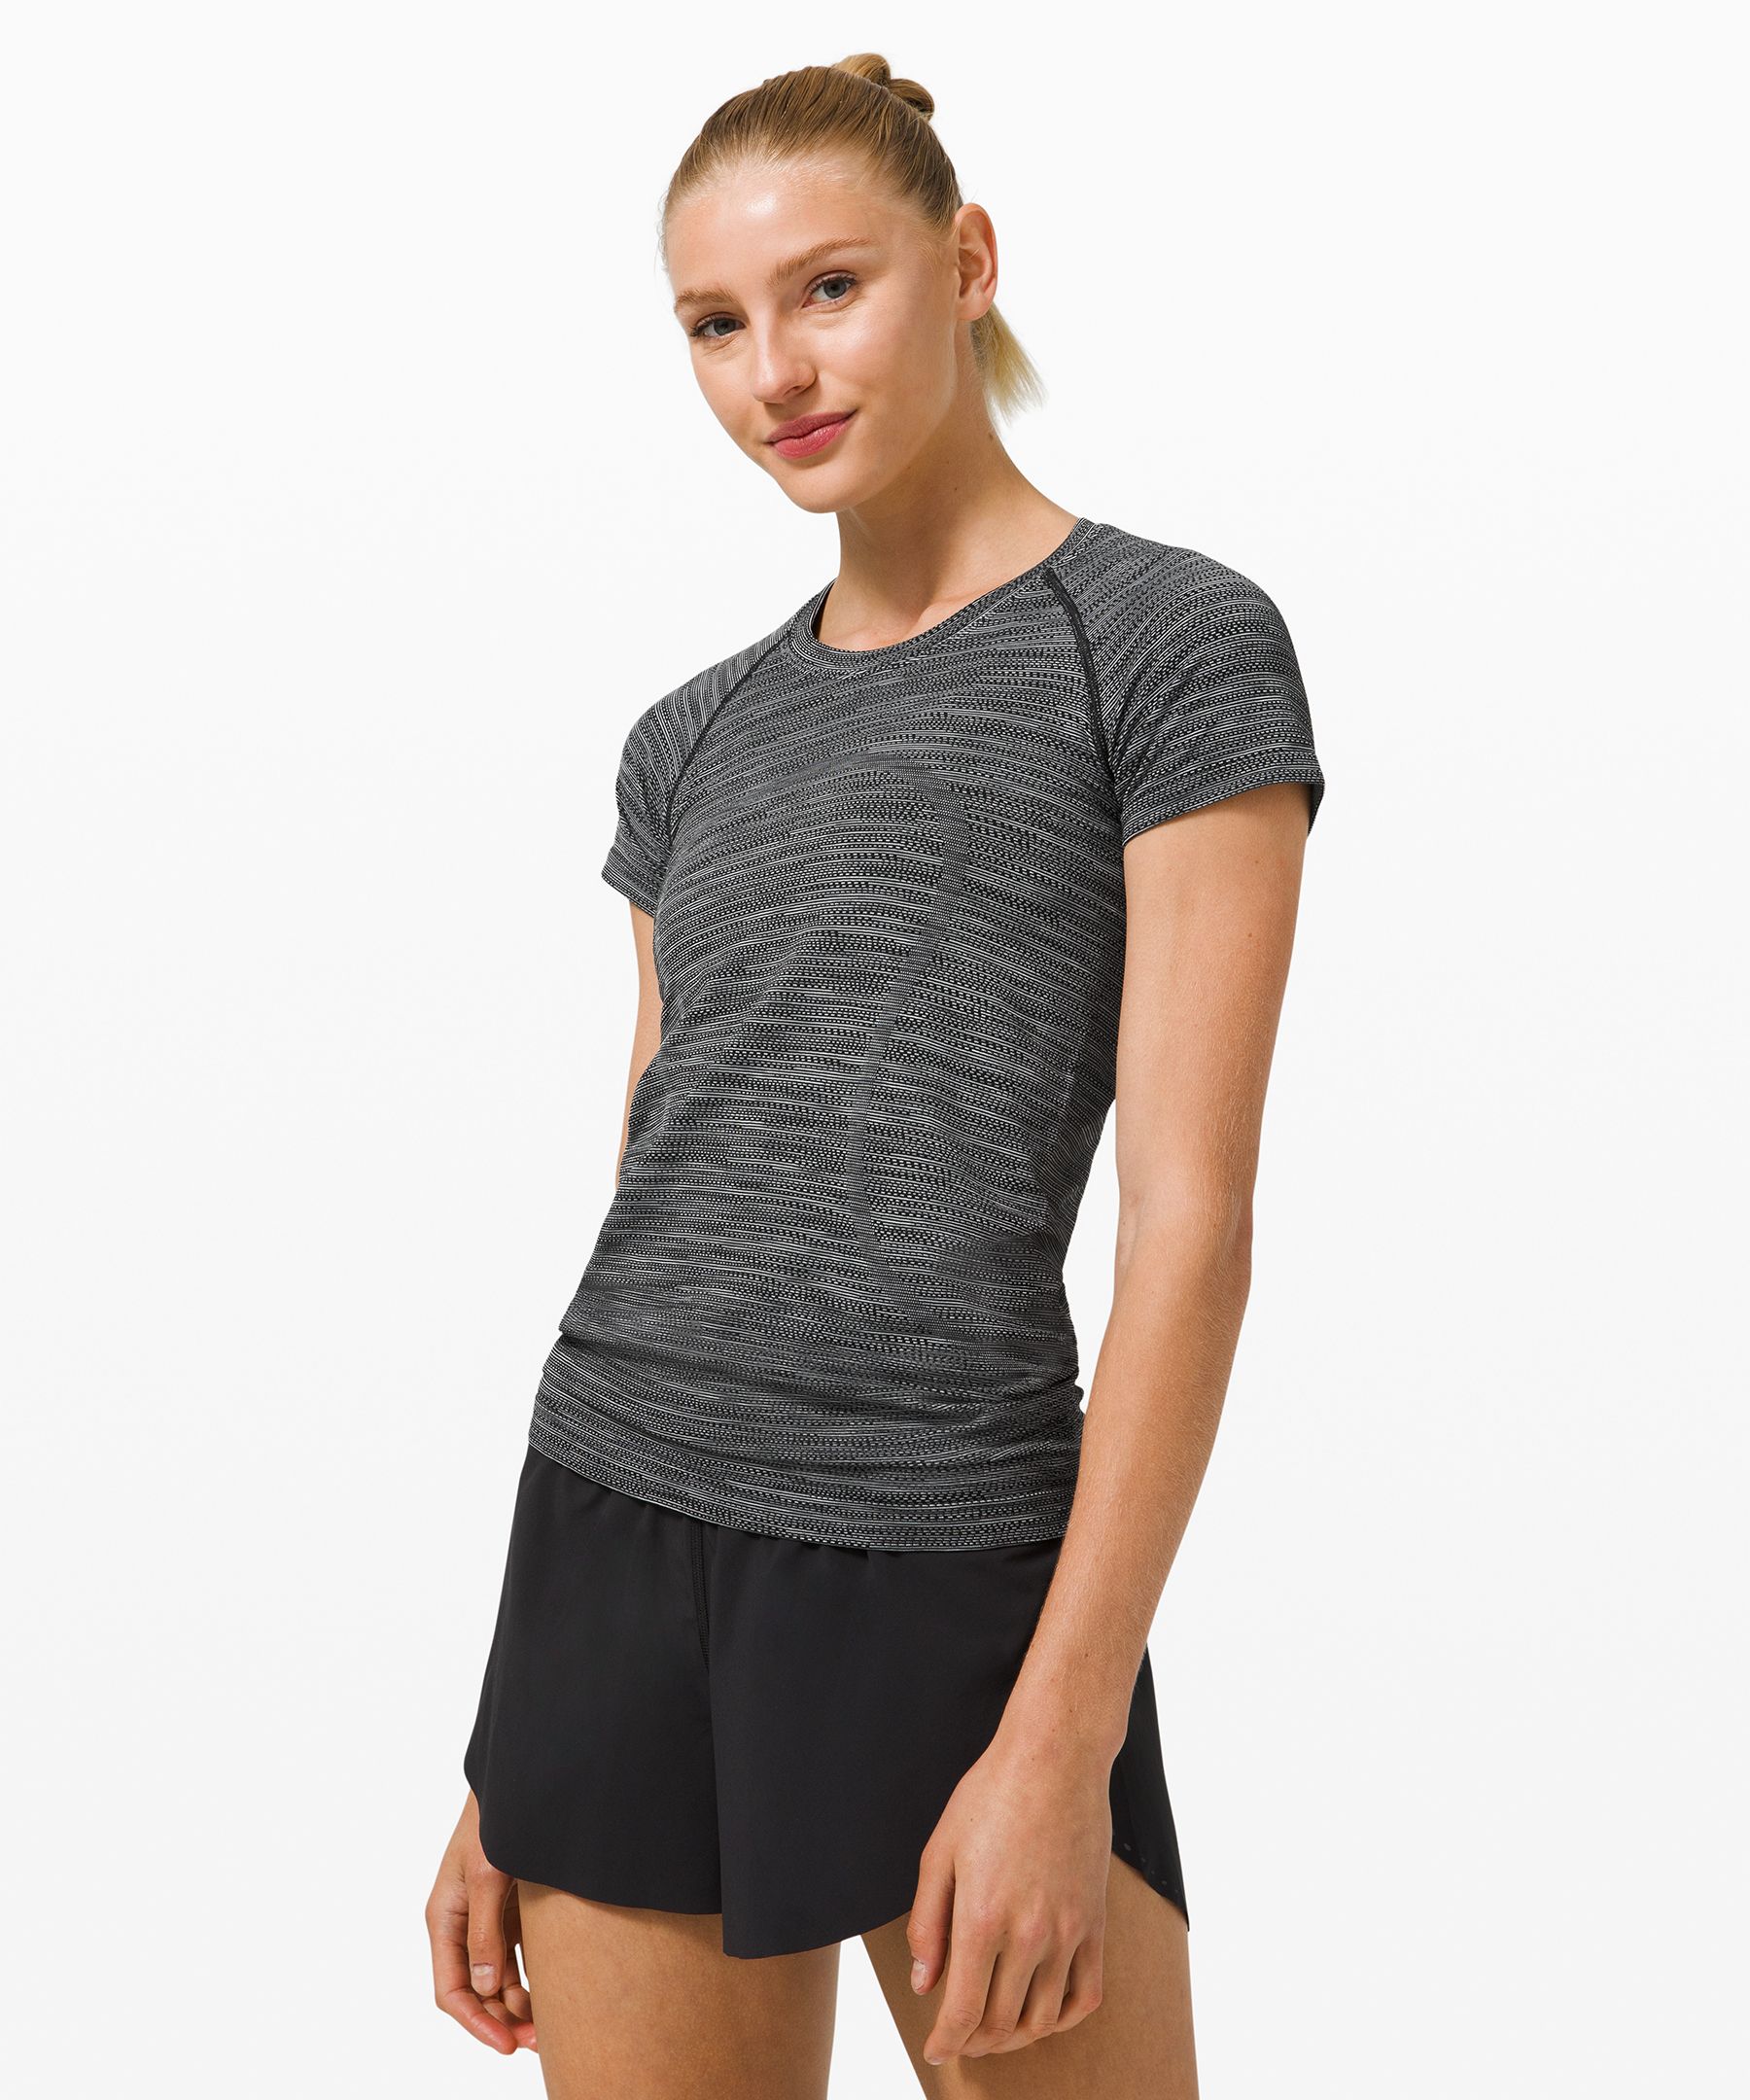 Lululemon Swiftly Tech Short Sleeve Shirt 2.0 In Printed